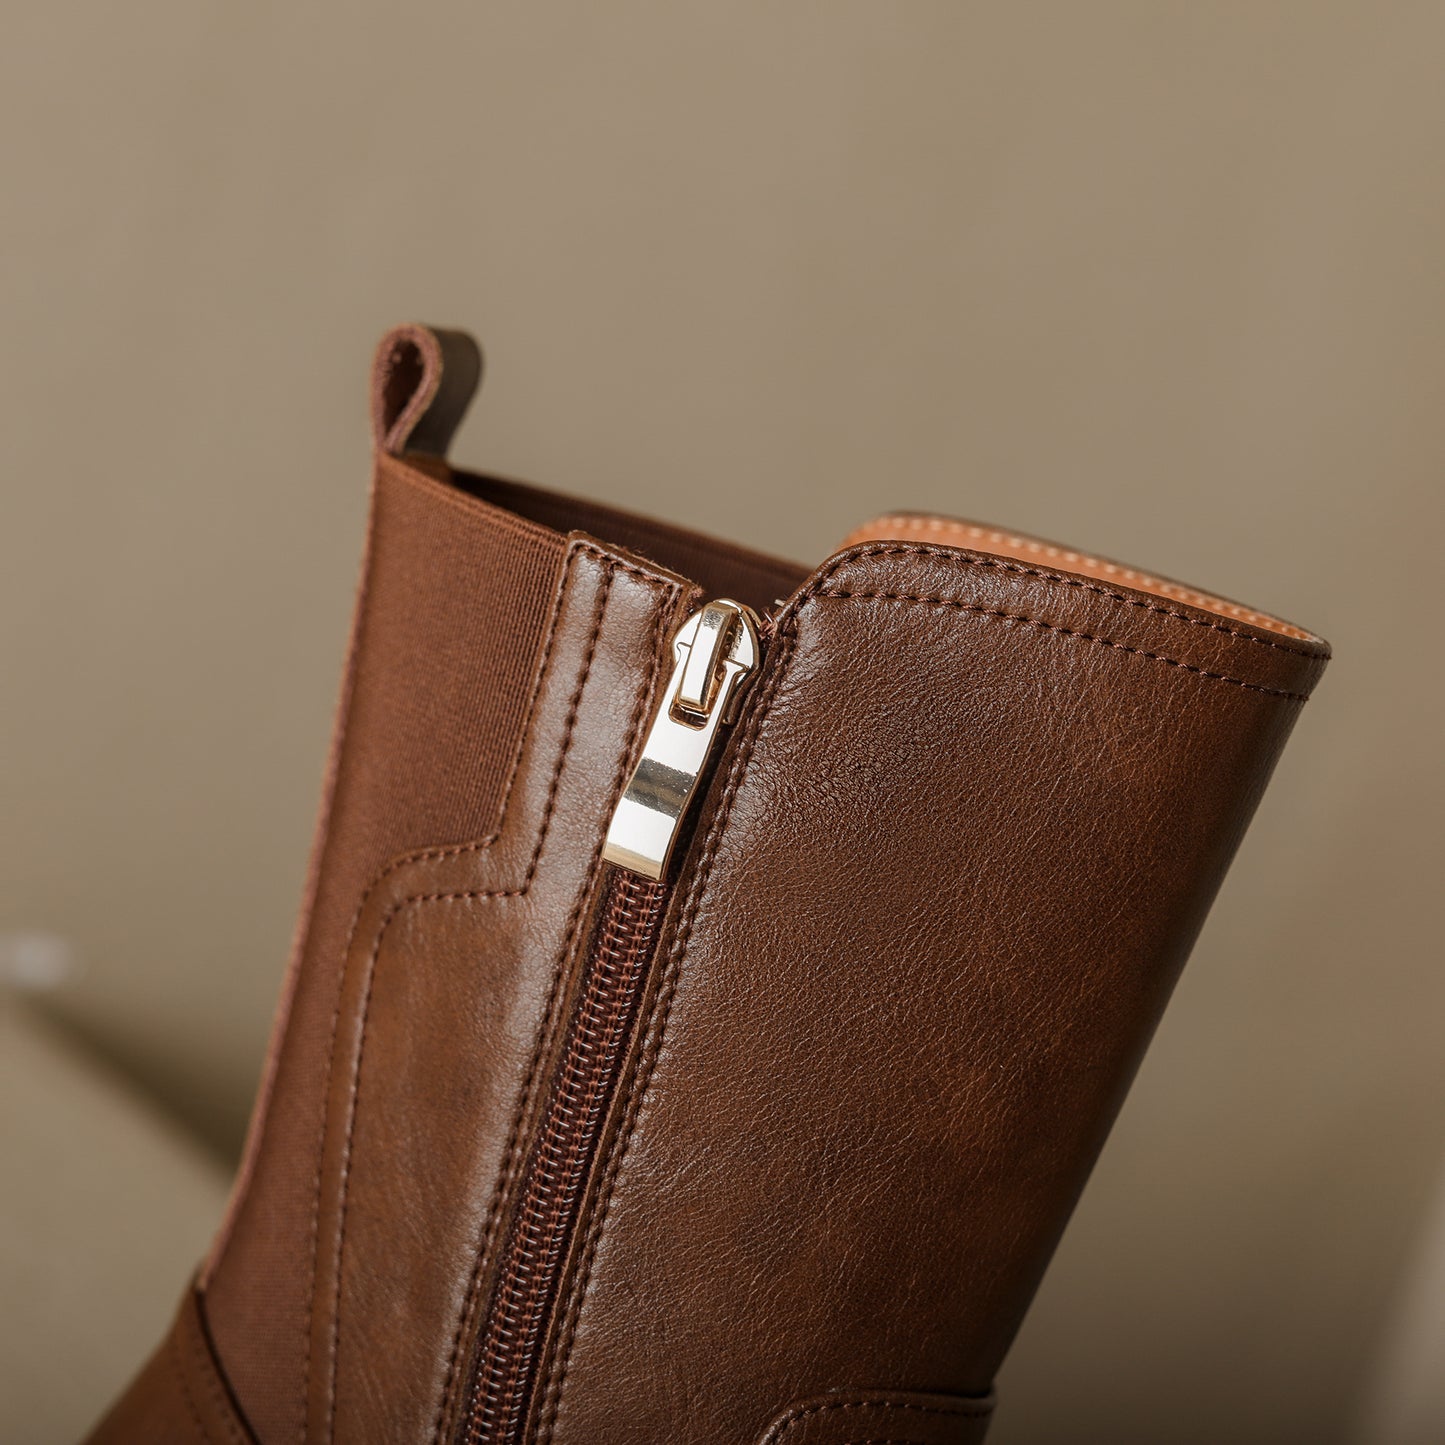 TinaCus Women's Genuine Leather Handmade Round Toe Side Zip Up Mid Block Heel Mid Calf Boots